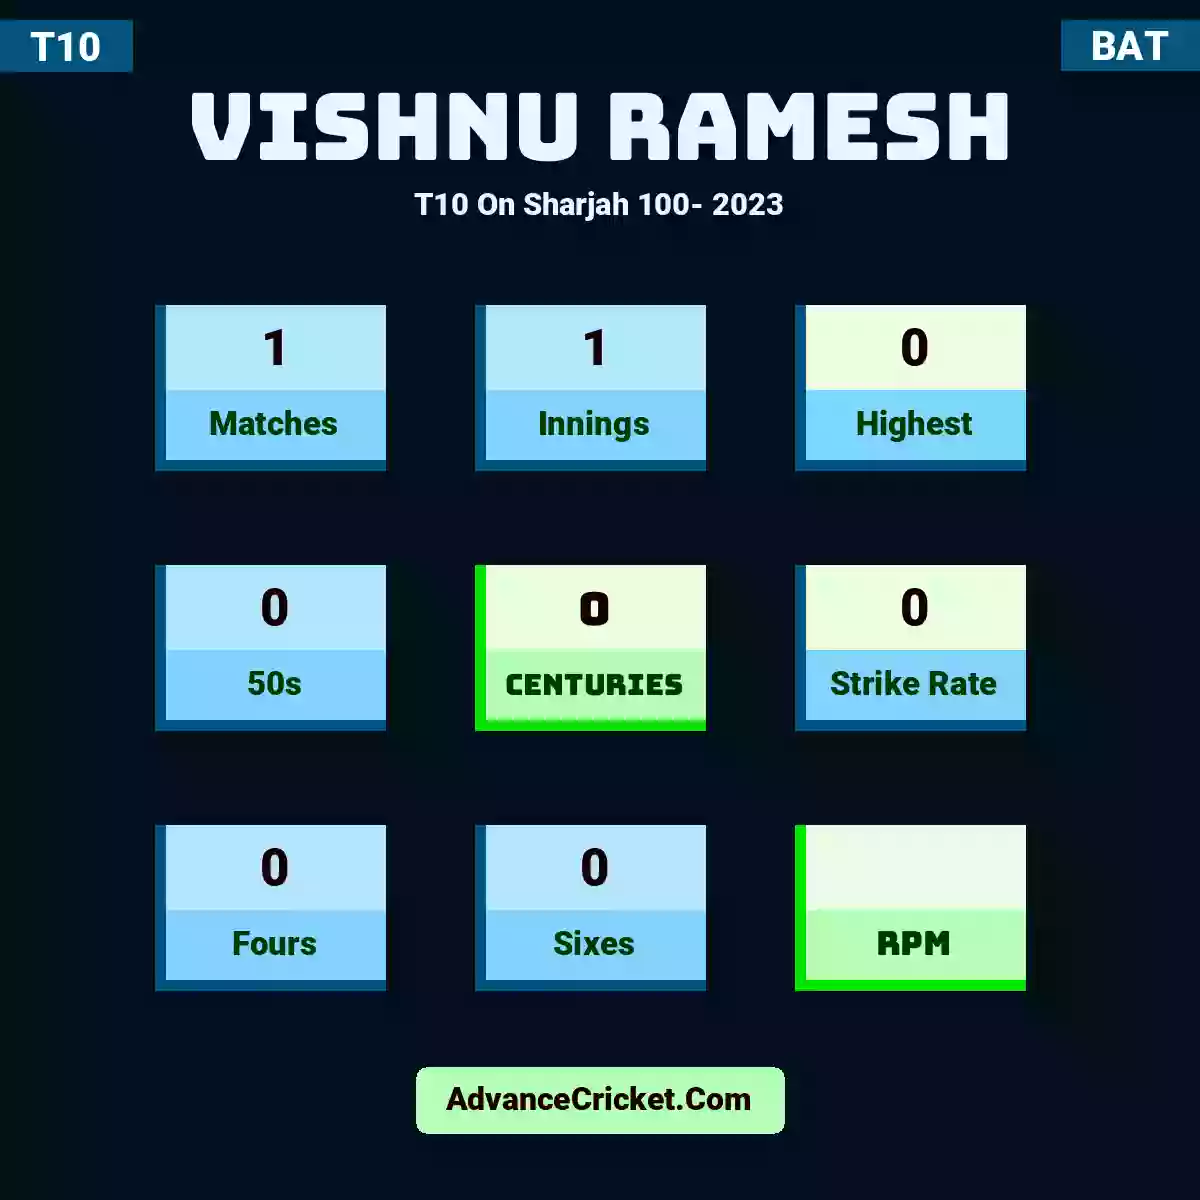 Vishnu Ramesh T10  On Sharjah 100- 2023, Vishnu Ramesh played 1 matches, scored 0 runs as highest, 0 half-centuries, and 0 centuries, with a strike rate of 0. V.Ramesh hit 0 fours and 0 sixes.